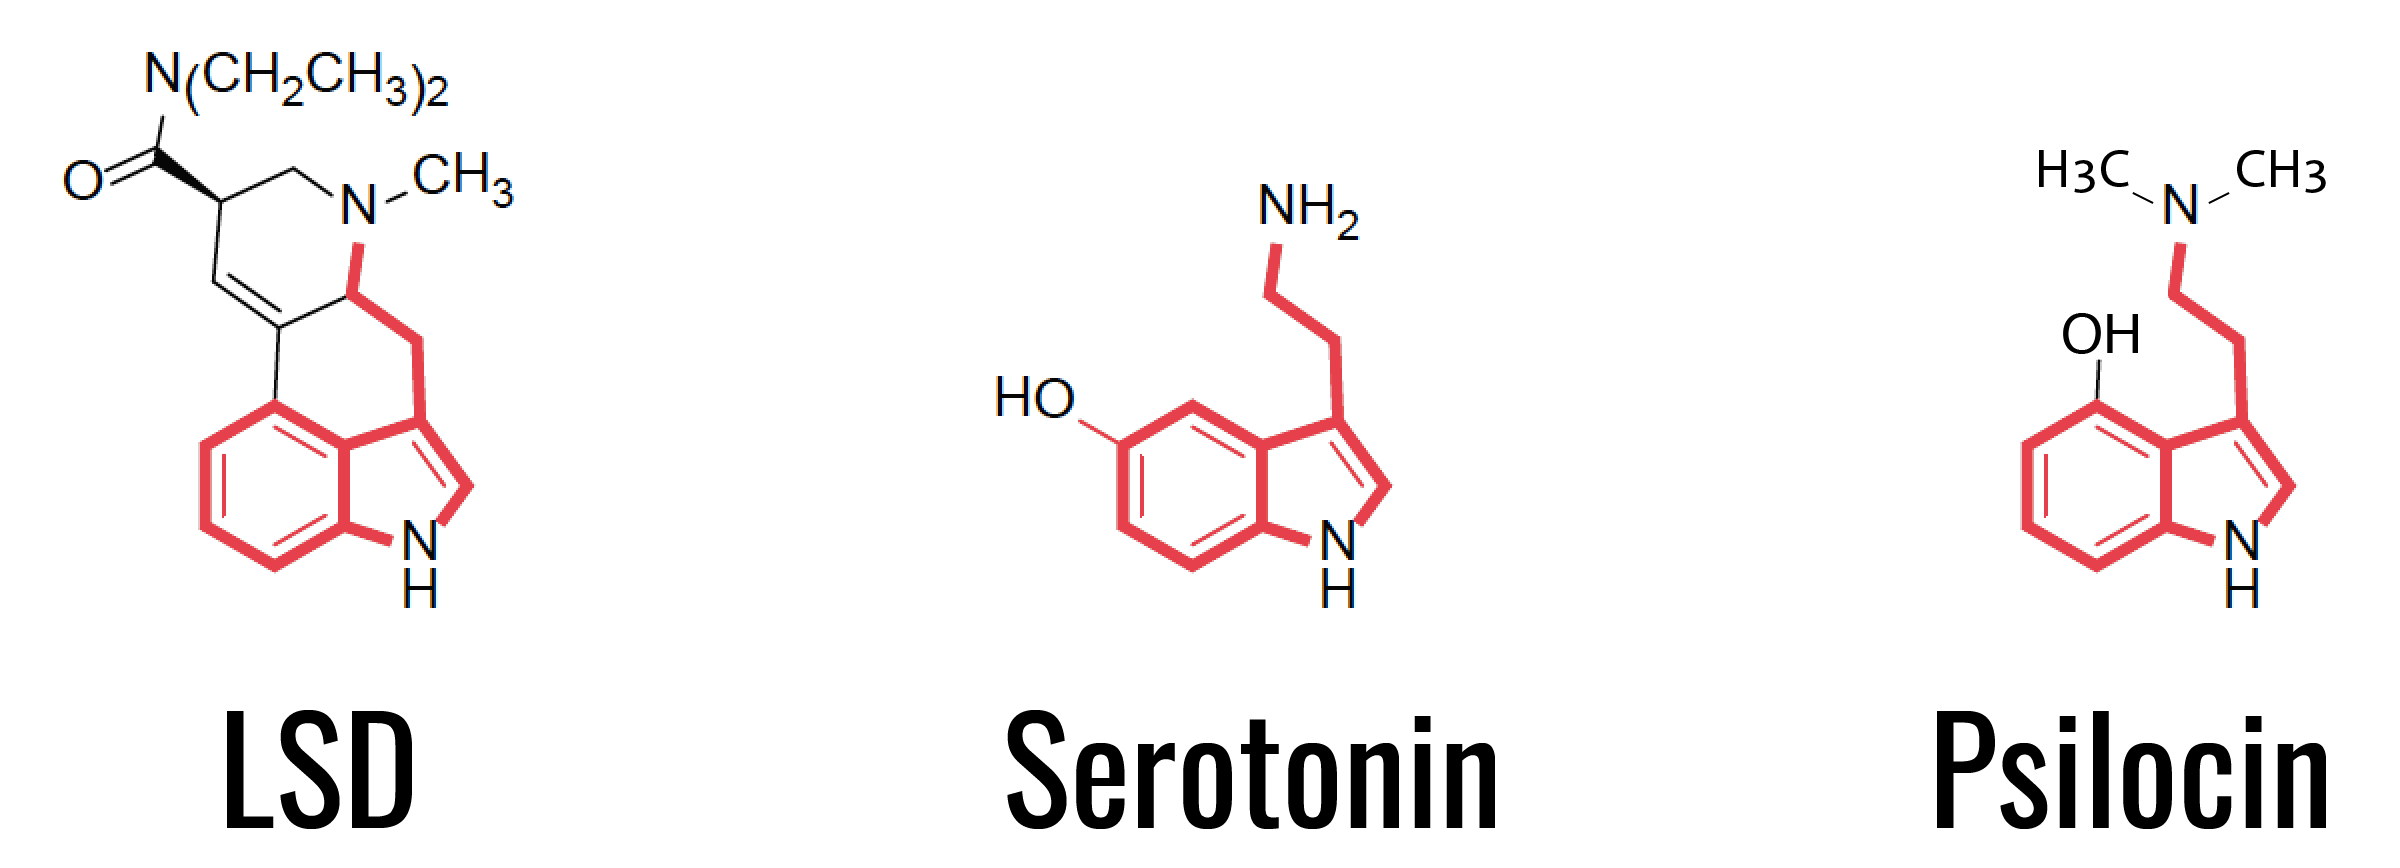 chemical-structure-LSD-serotonin-psilocin@2x.png